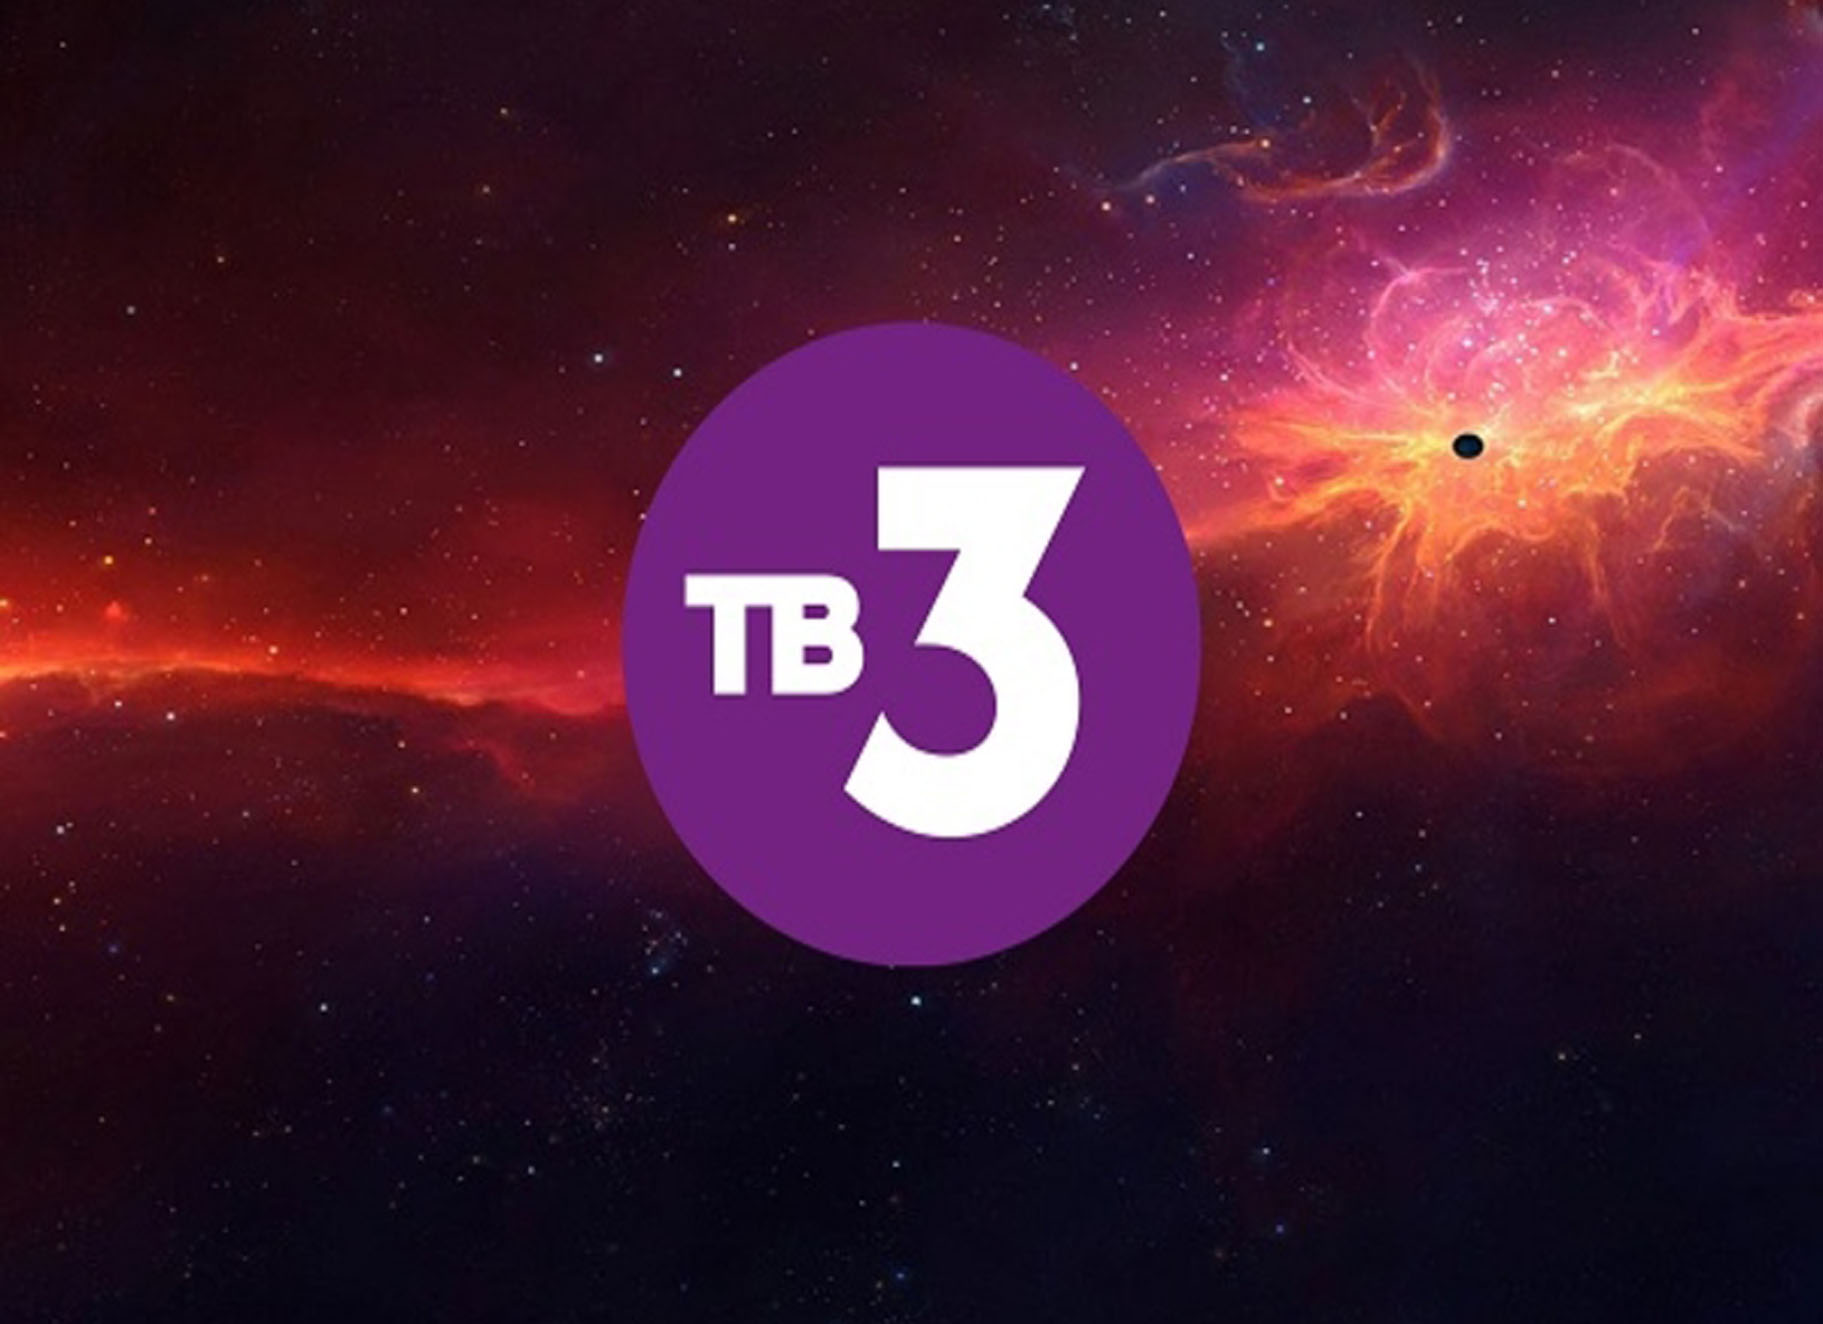 Канал 3.3. Канал тв3. Тв3 логотип. Логотип канала тв3. ТВ 3 эмблема.